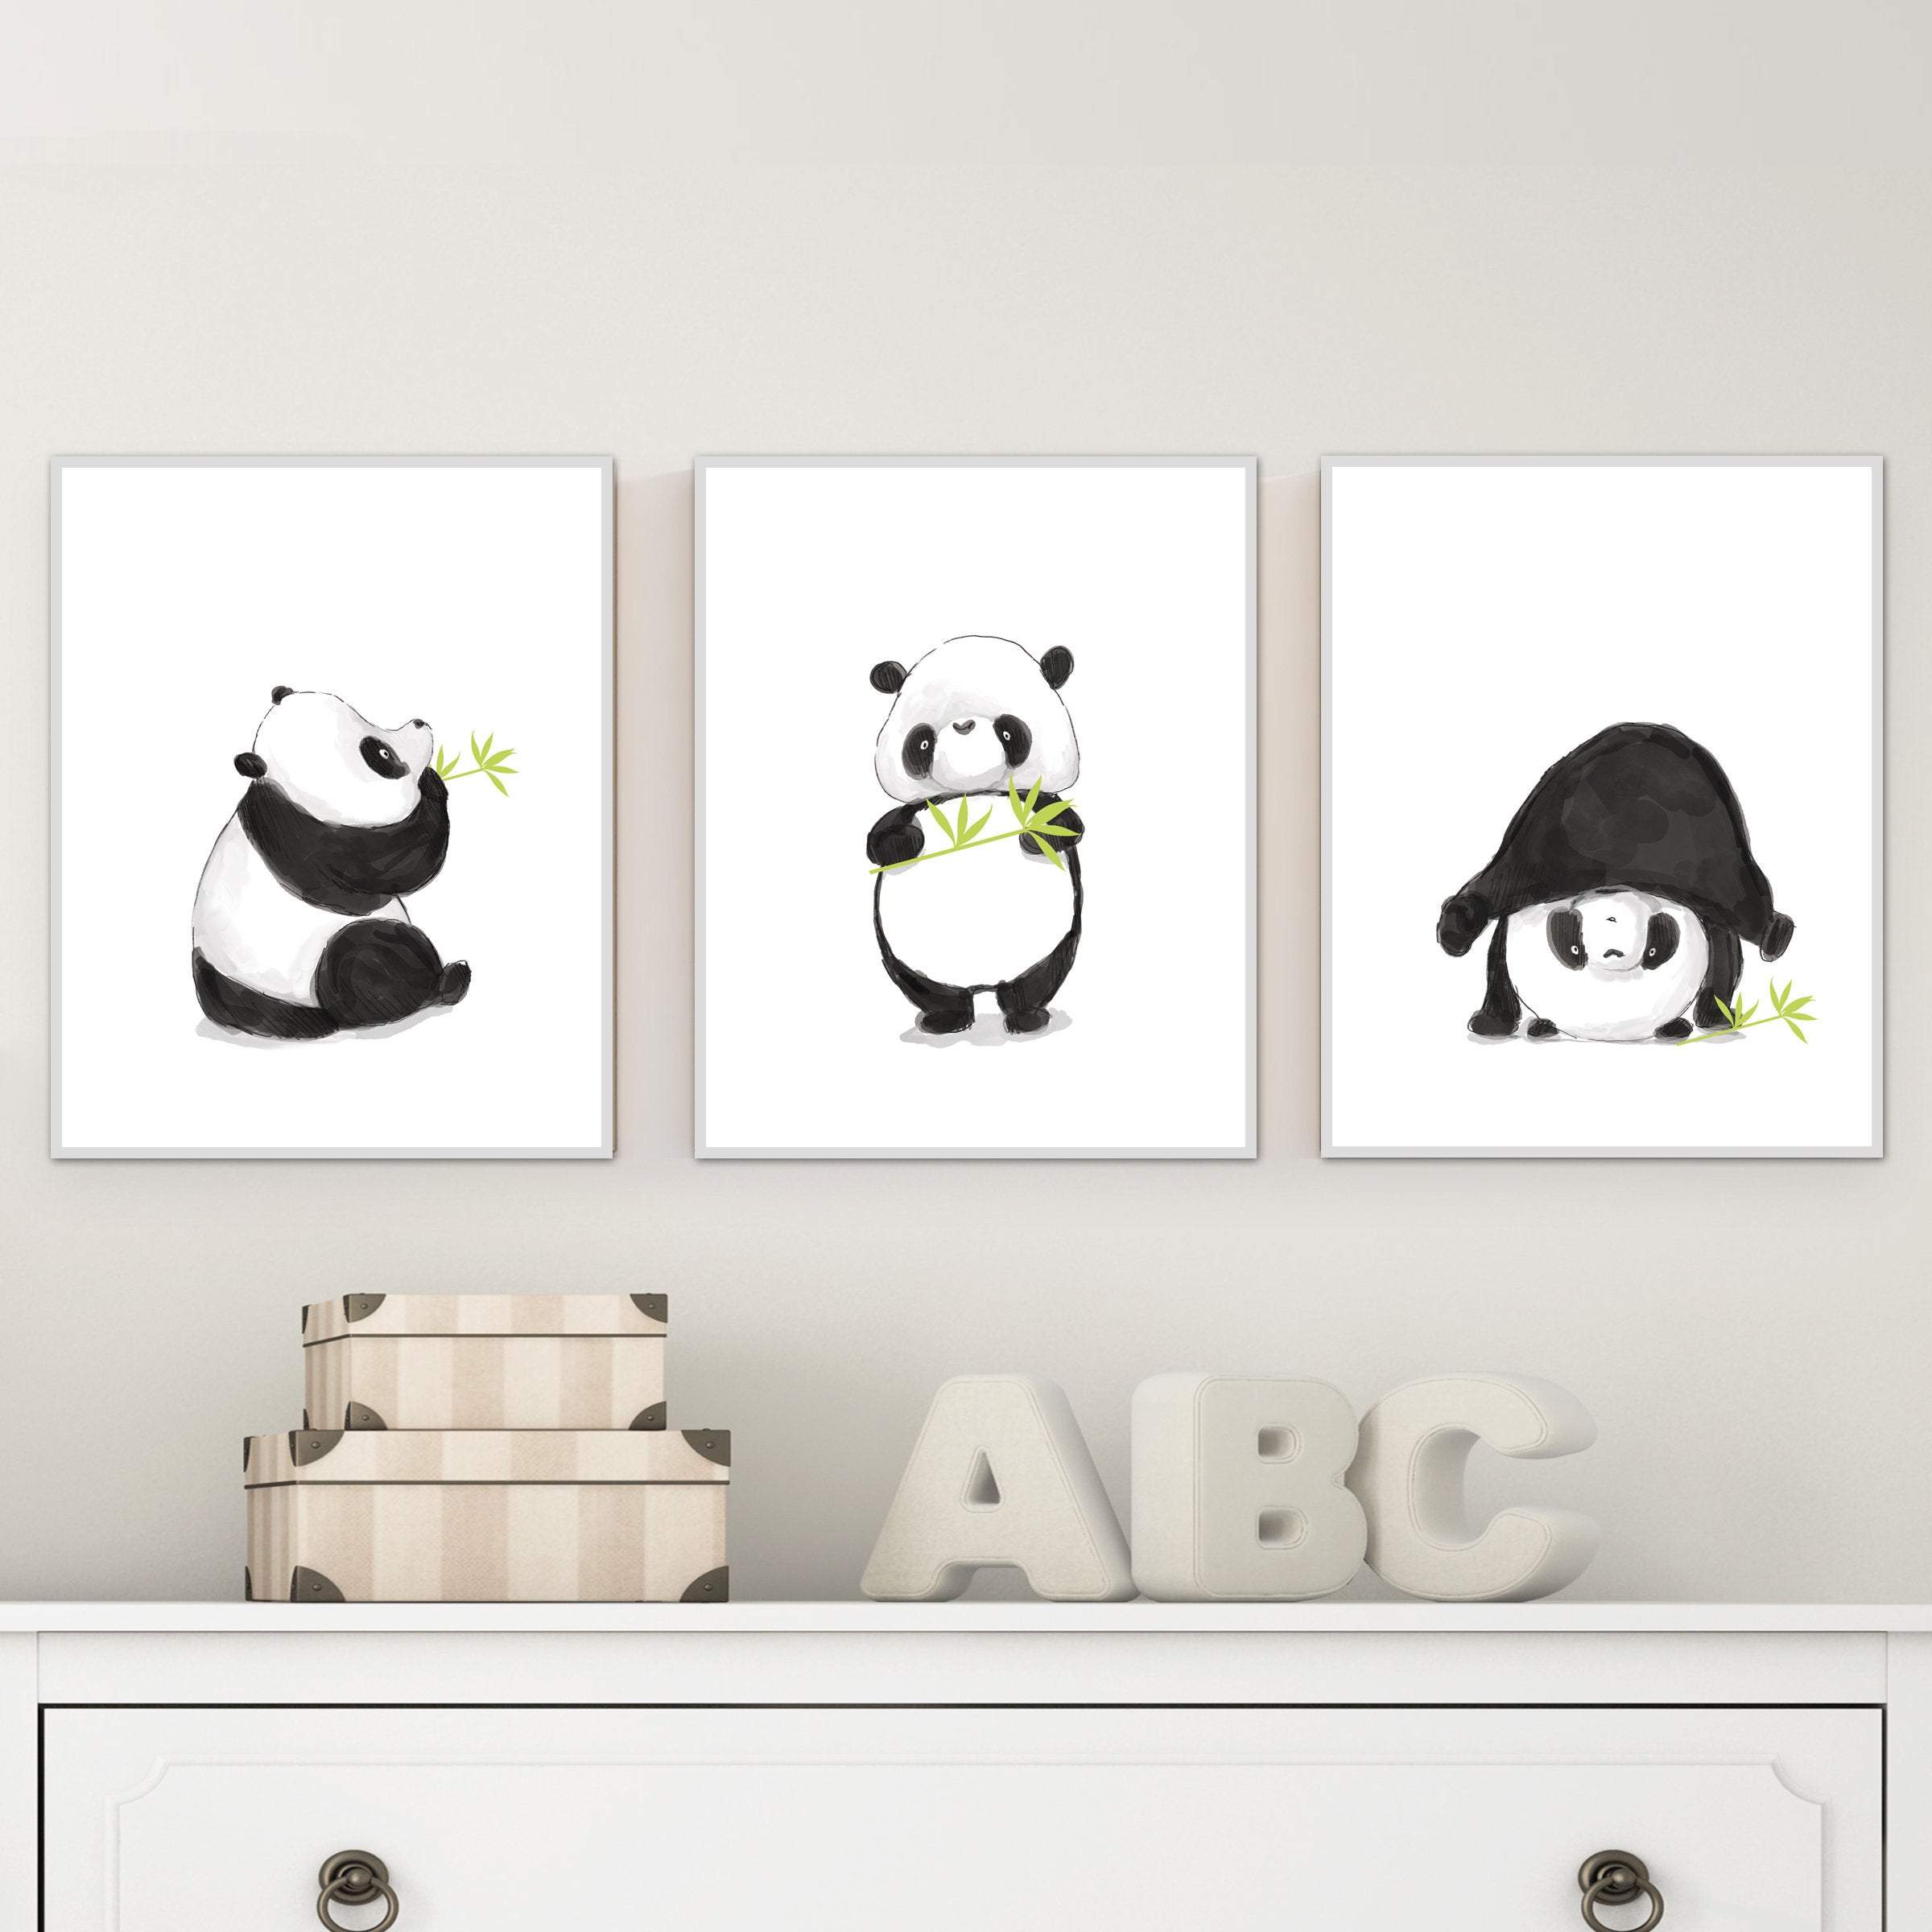 Panda print - Black and white wall art - Panda printable - Minimalist nursery decor - Panda wall art - Black and white nursery - H1981 nursery art print baby nursery bedroom decor